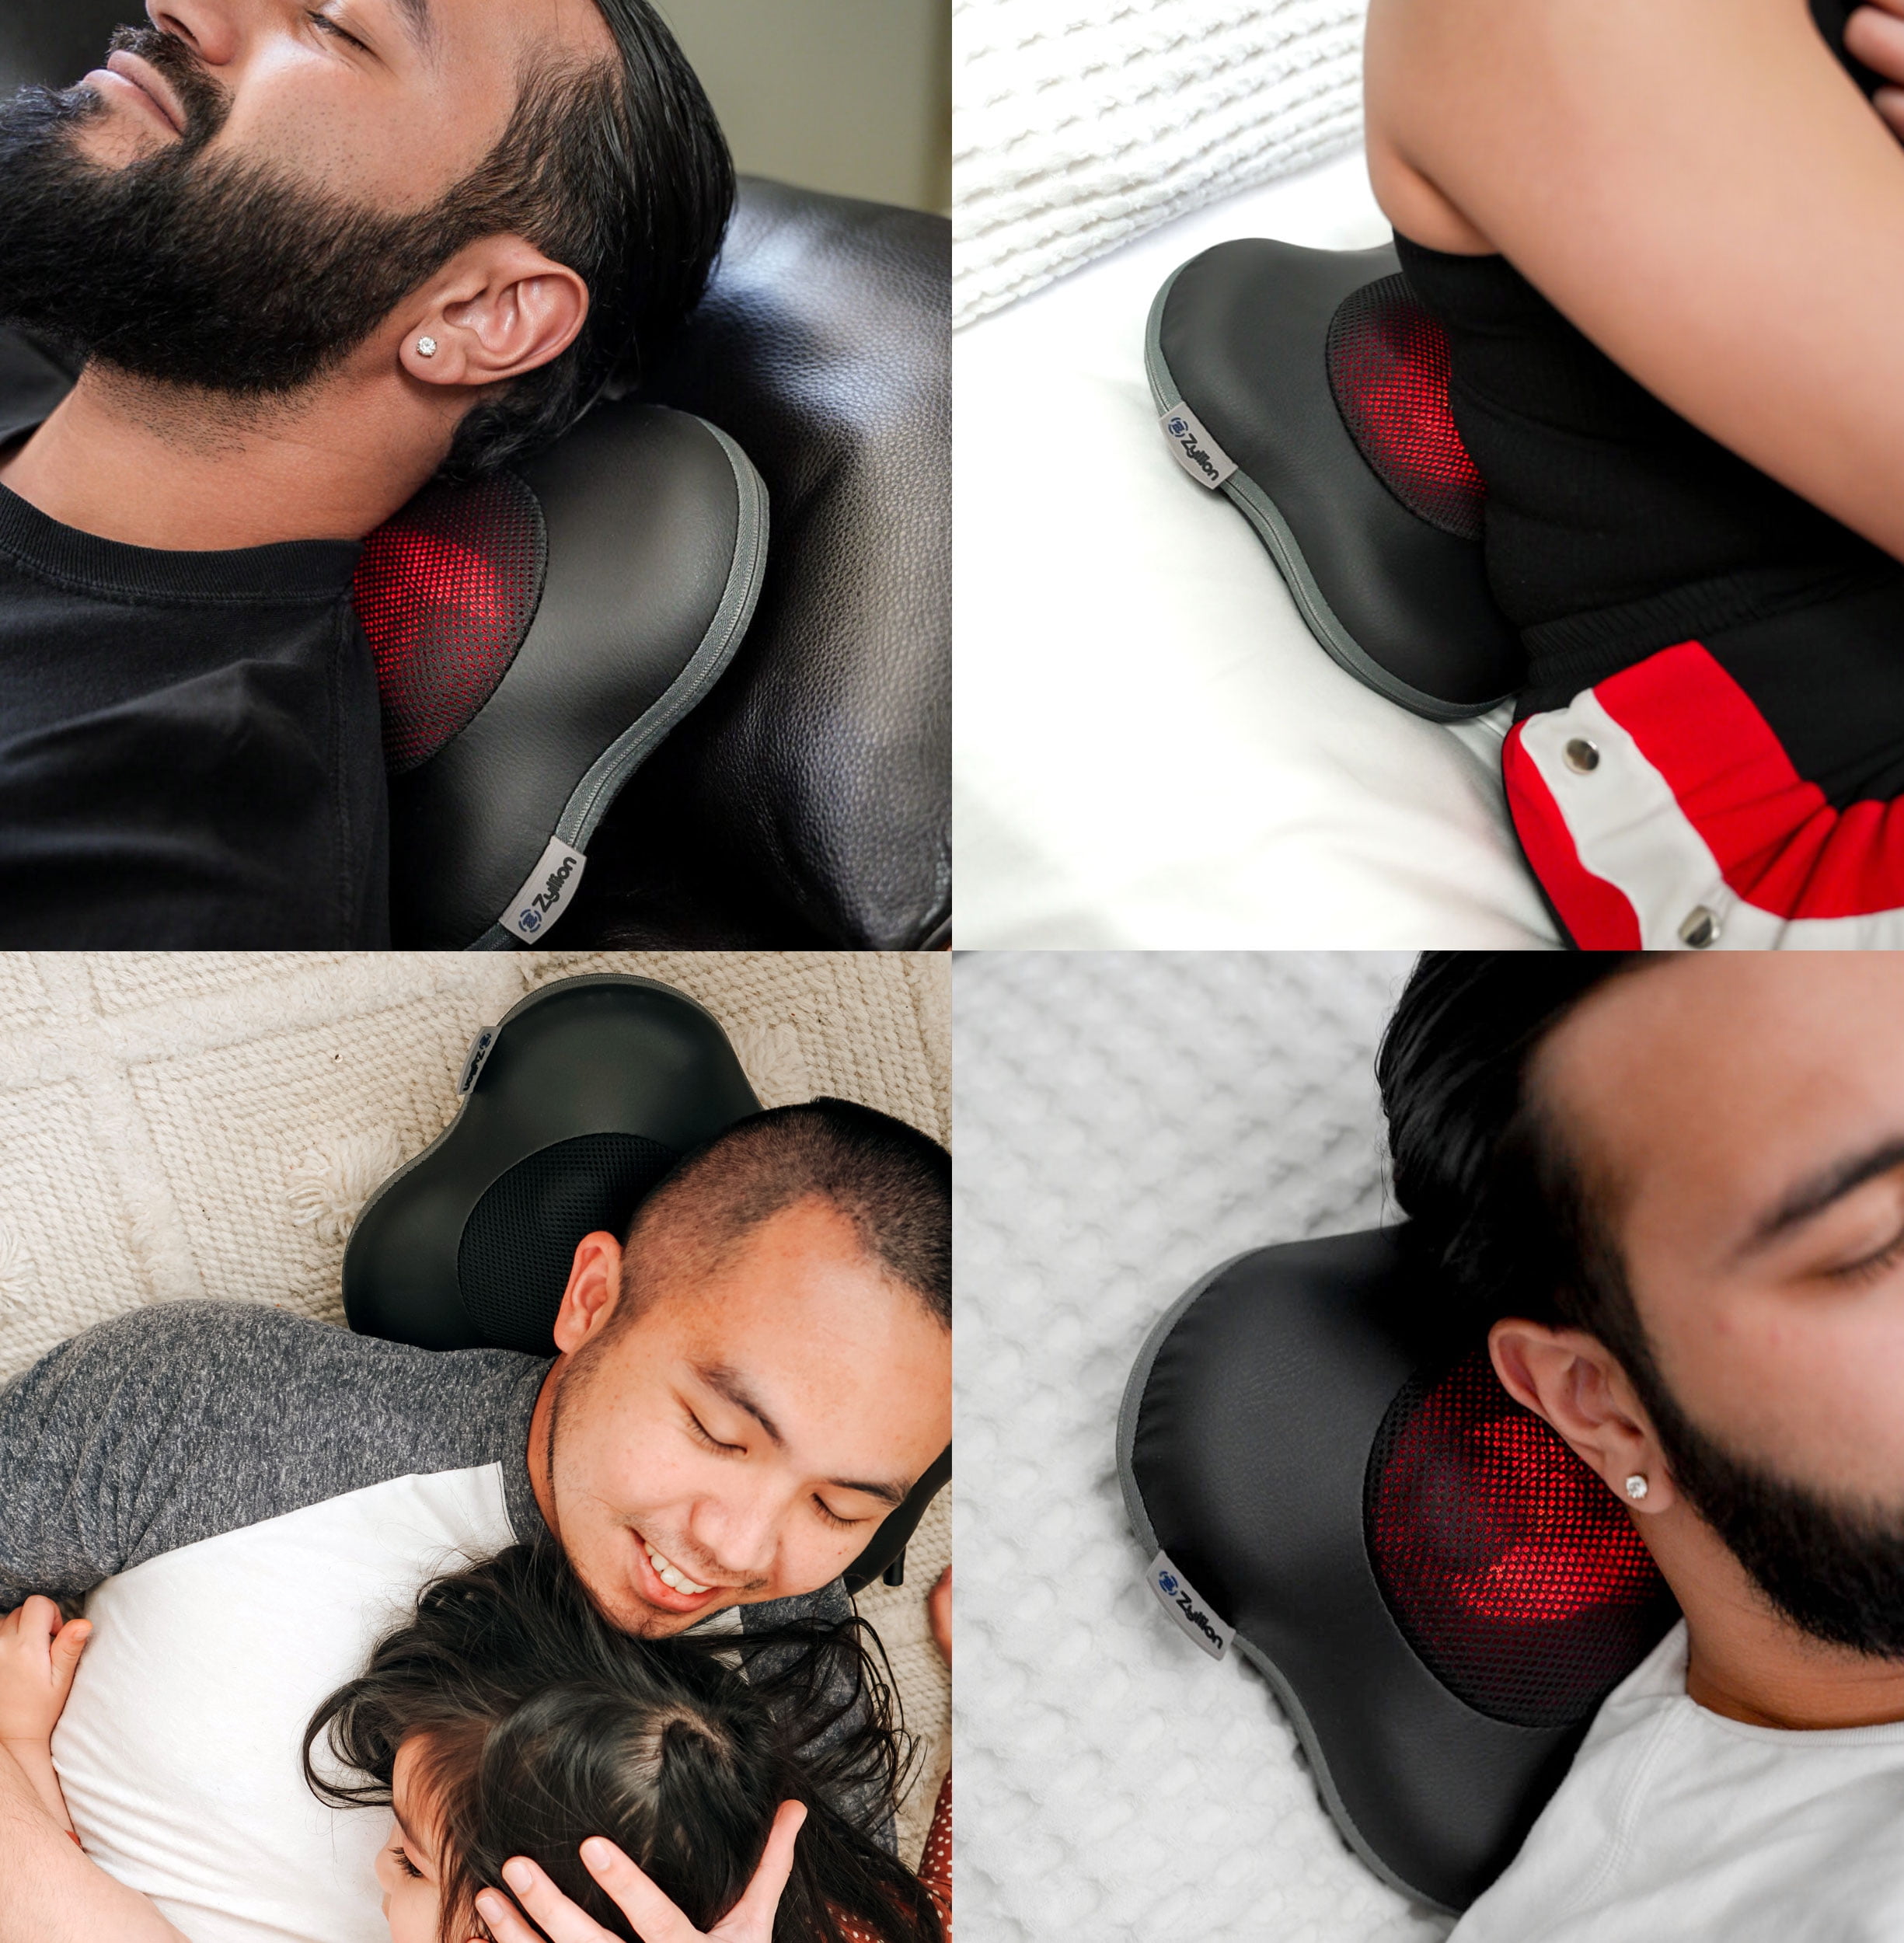 Zyllion Shiatsu Neck & Back Seat Cushion Massager with Soothing Heat  Function & 3 Massage Styles, Rolling, Spot, and Kneading (Black), Model  ZMA14, 1 Year Warranty 